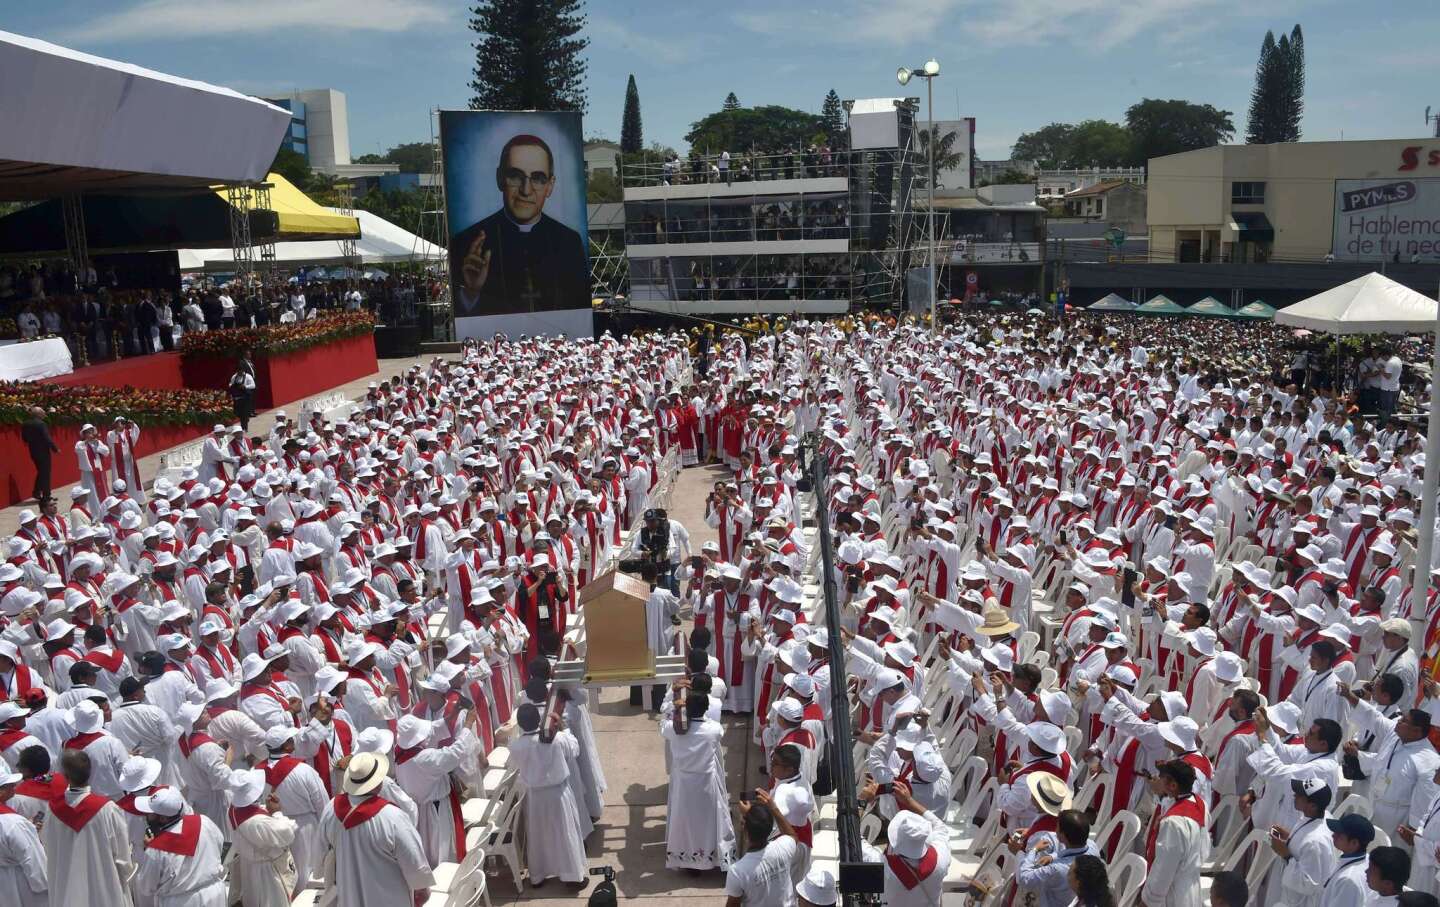 Catholics participate in a Mass celebrating the beatification of Salvadorean Archbishop Oscar Romero at San Salvador's main square on Saturday.